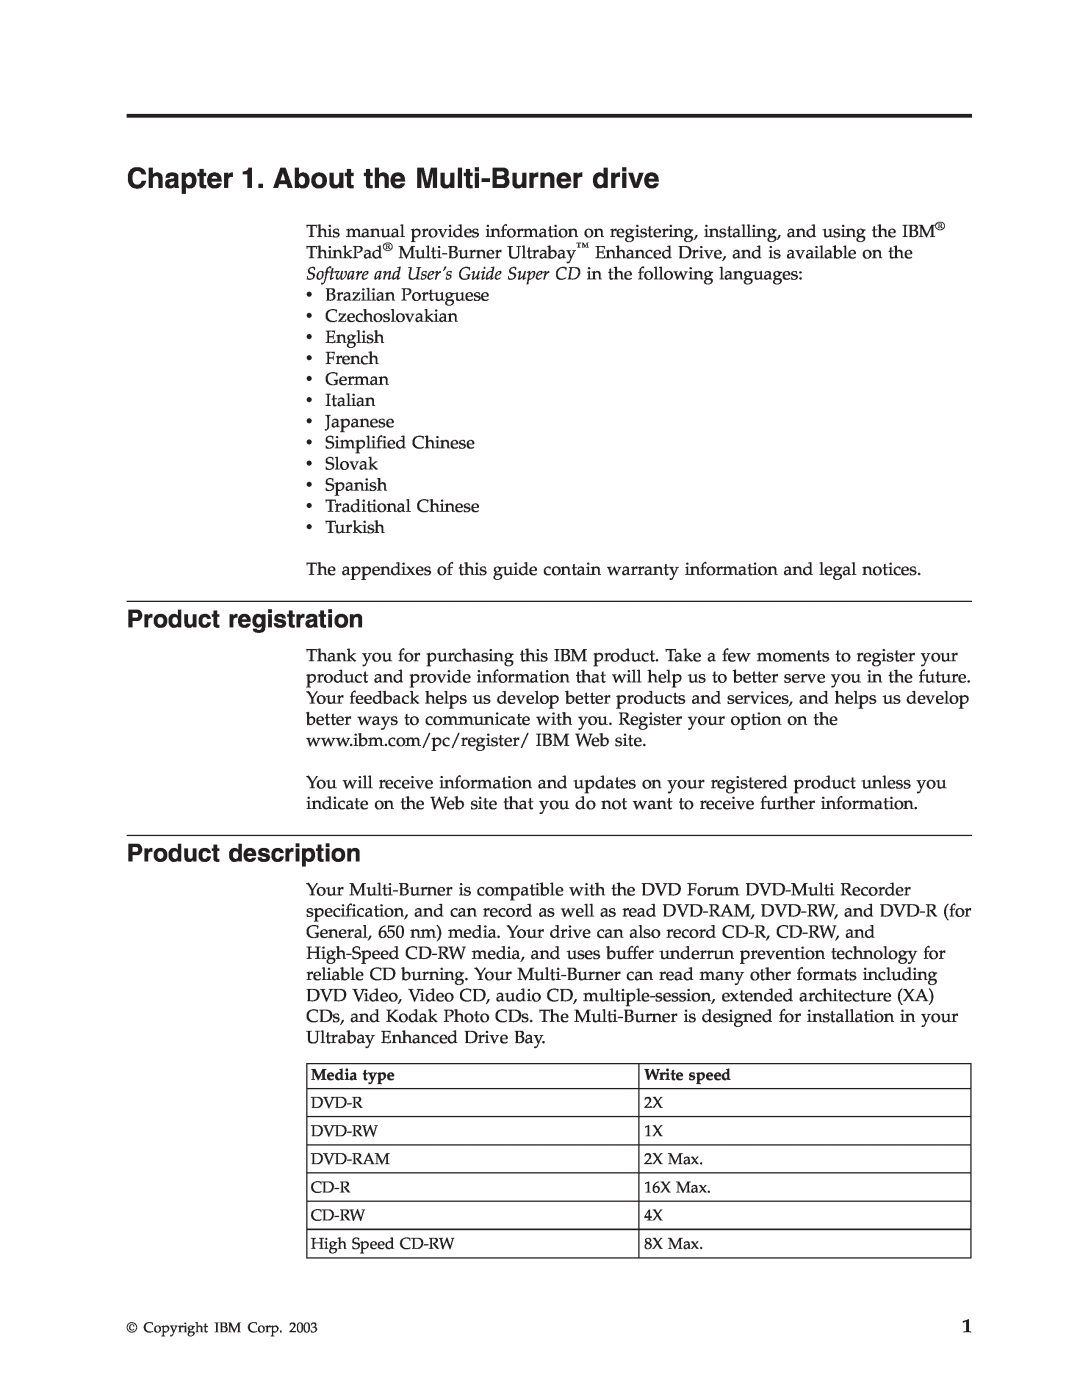 IBM 73P3279 manual About the Multi-Burner drive, Product registration, Product description 